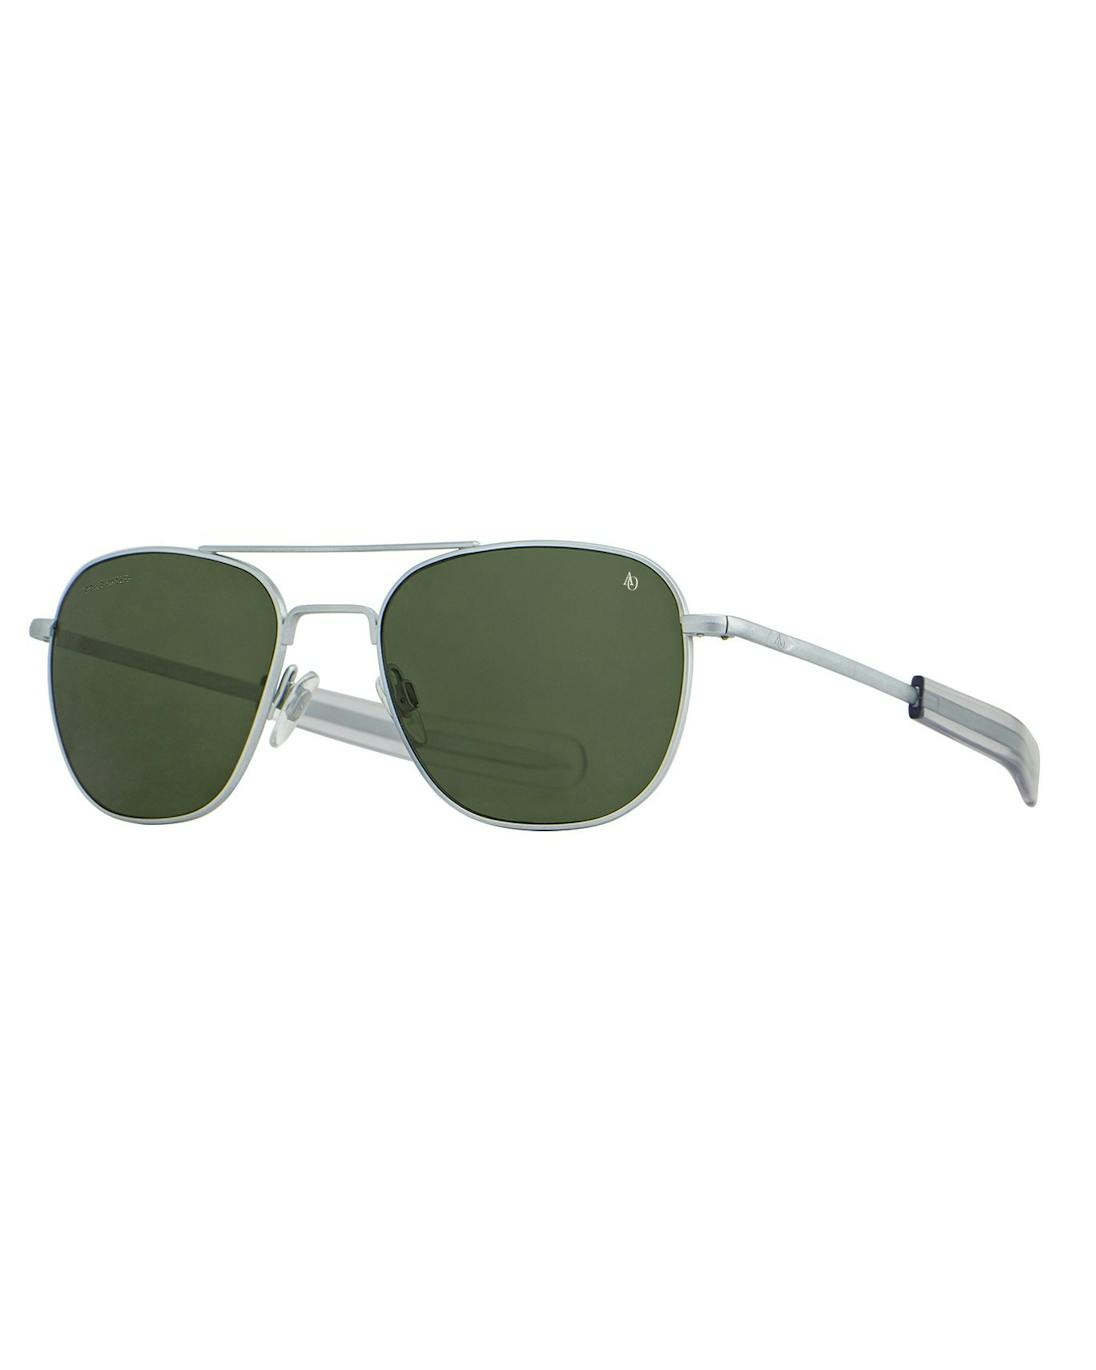 American Optical Original Pilot - Matte Silver/Polarized Nylon Green |  Sunglasses | Huckberry